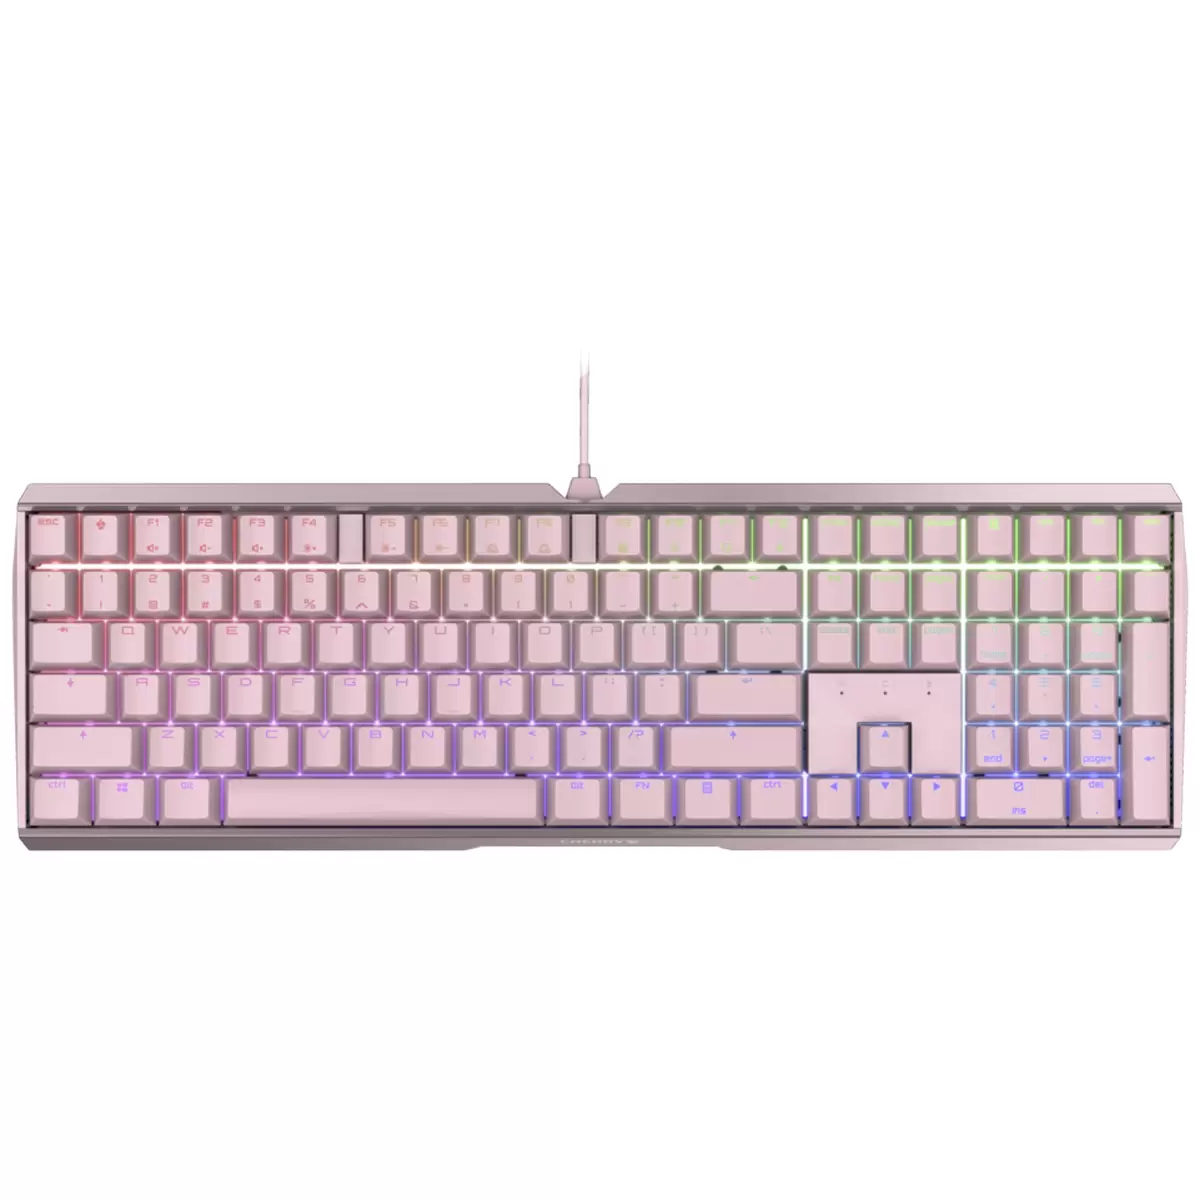 CHERRY MX 3.0S RGB Gaming Keyboard (Pink)